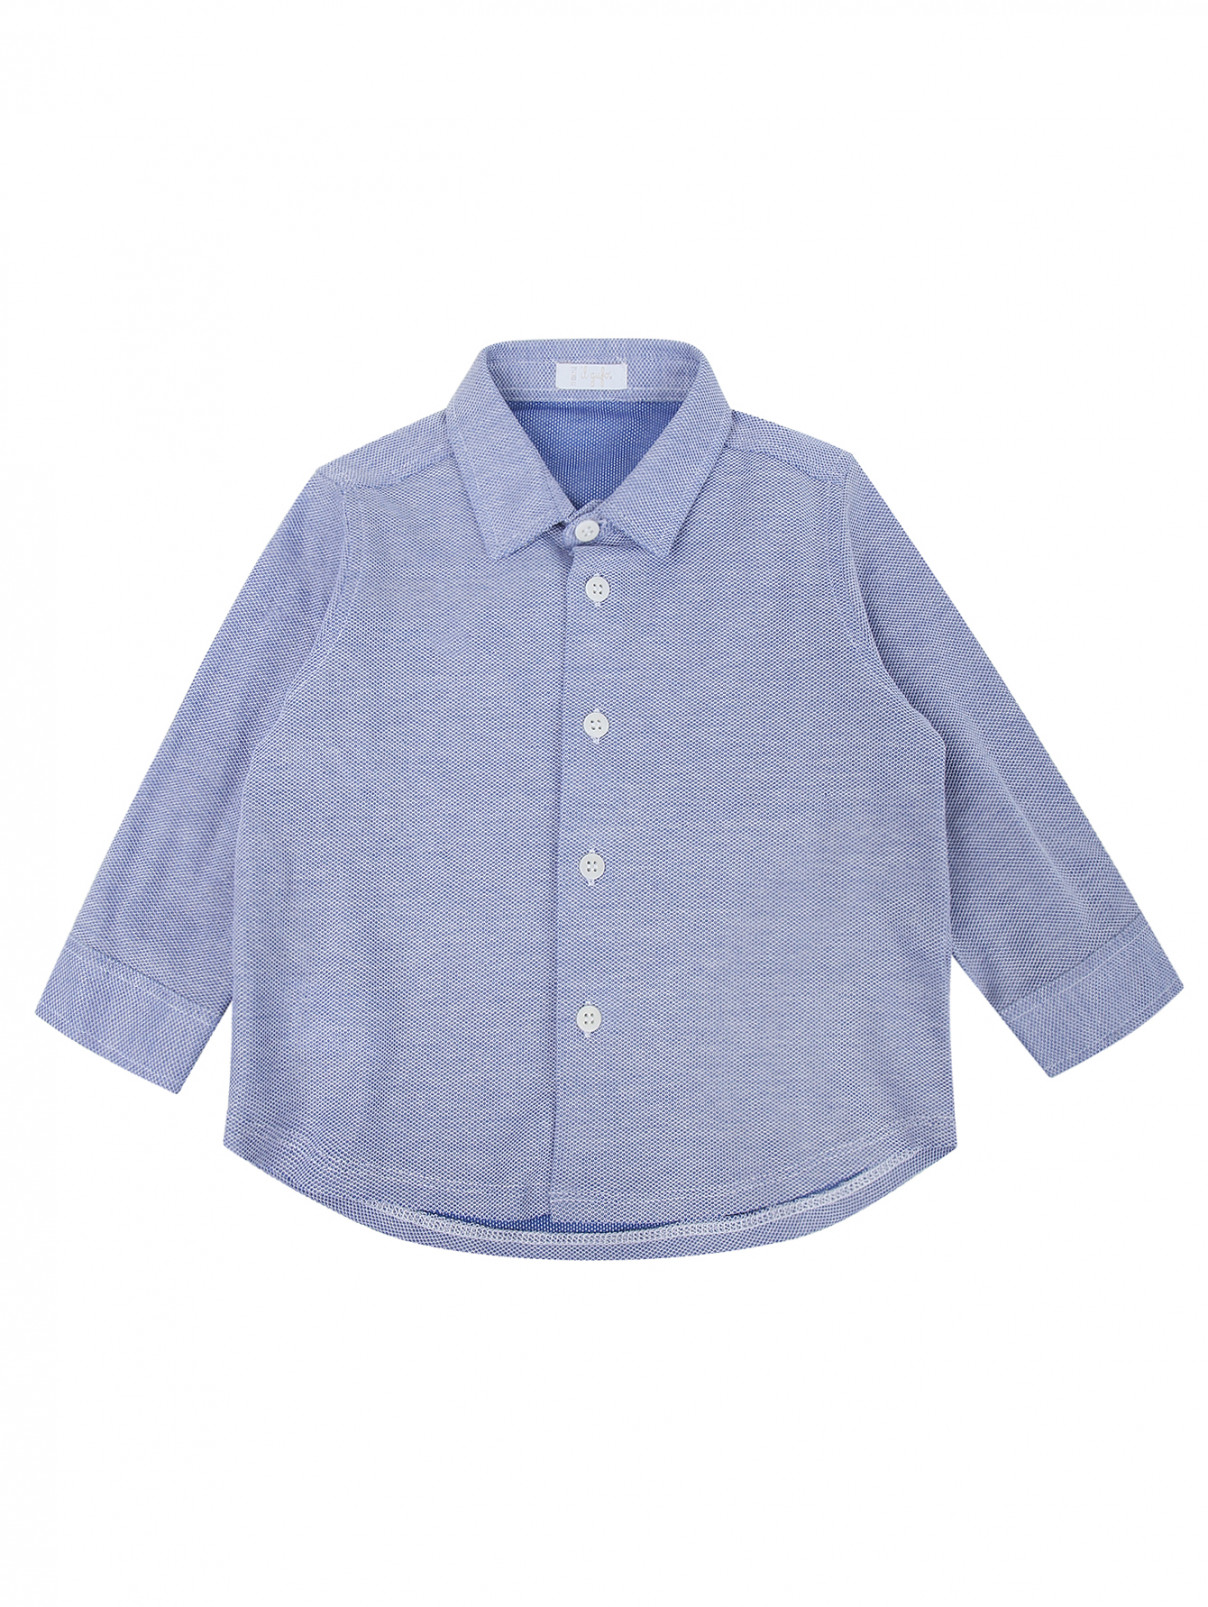 Рубашка из хлопка Il Gufo  –  Общий вид  – Цвет:  Синий